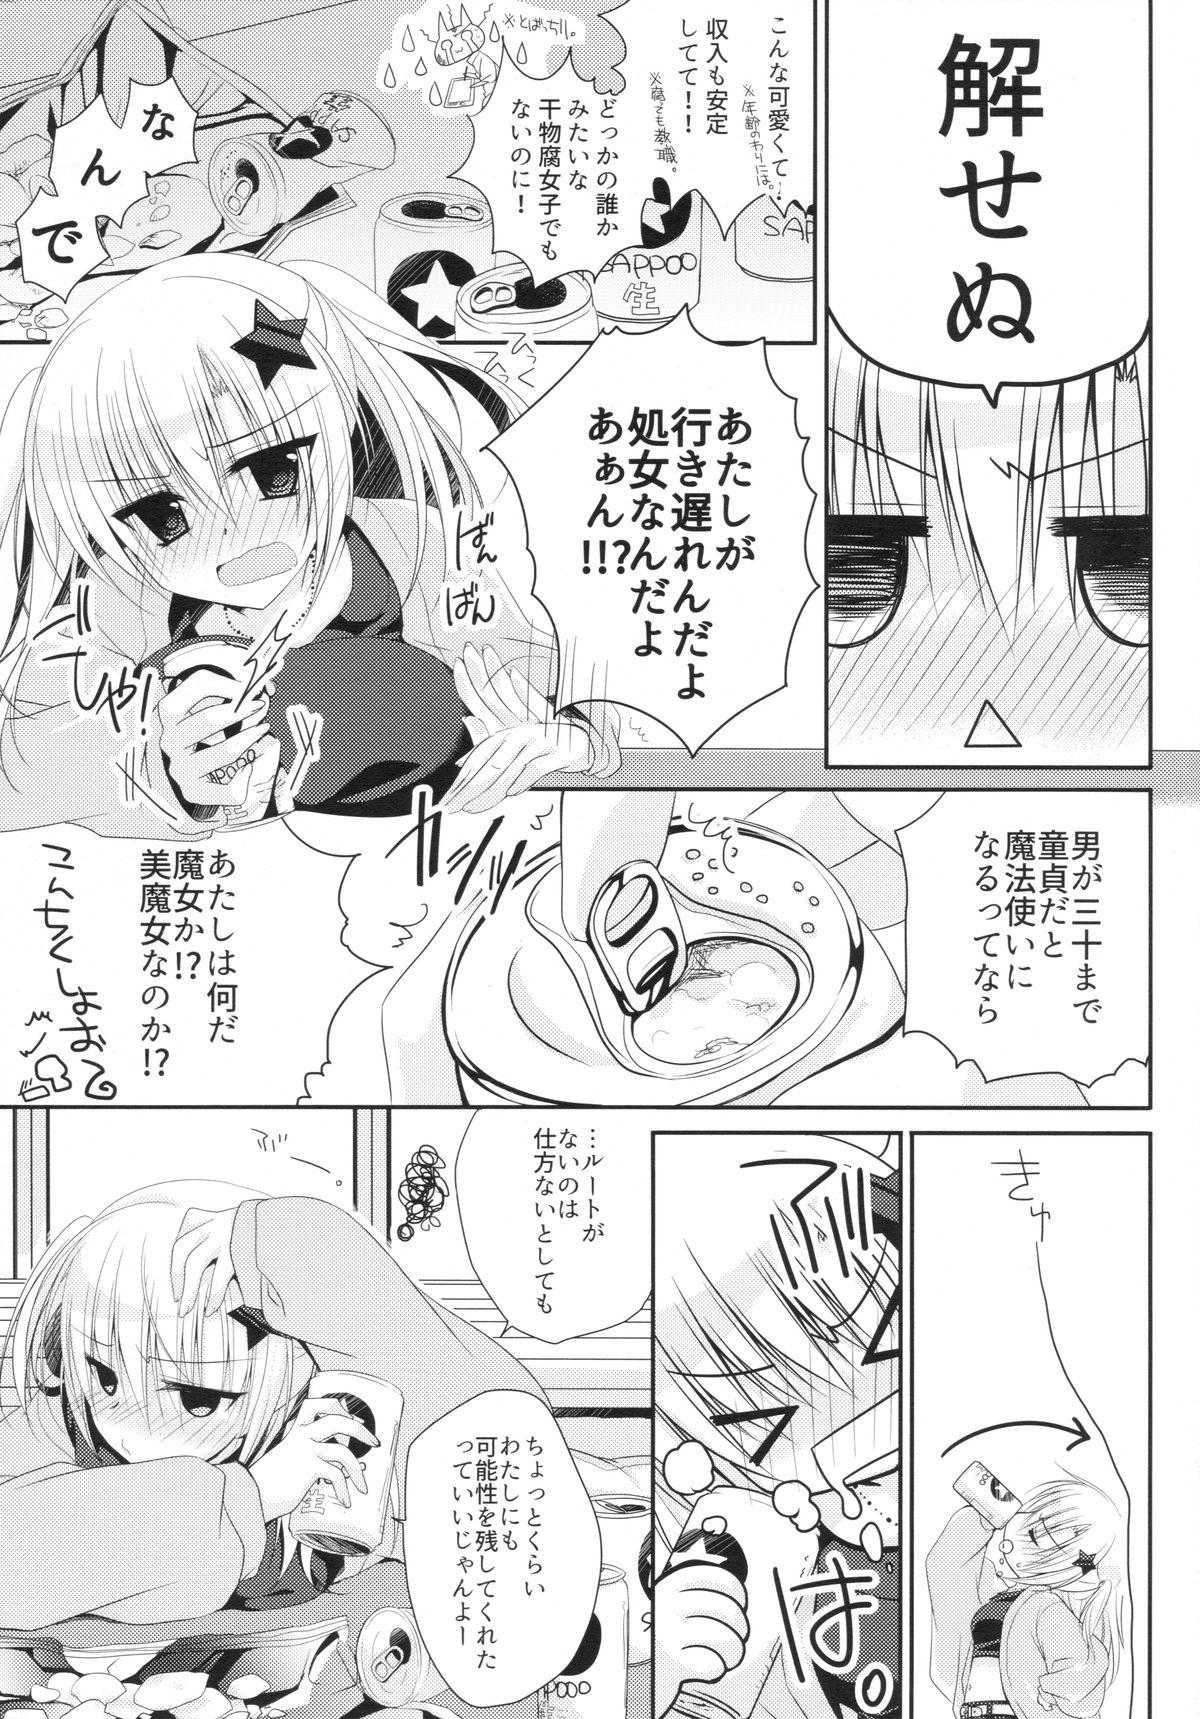 Blows Yuka Sensei 29-sai Fat - Page 4